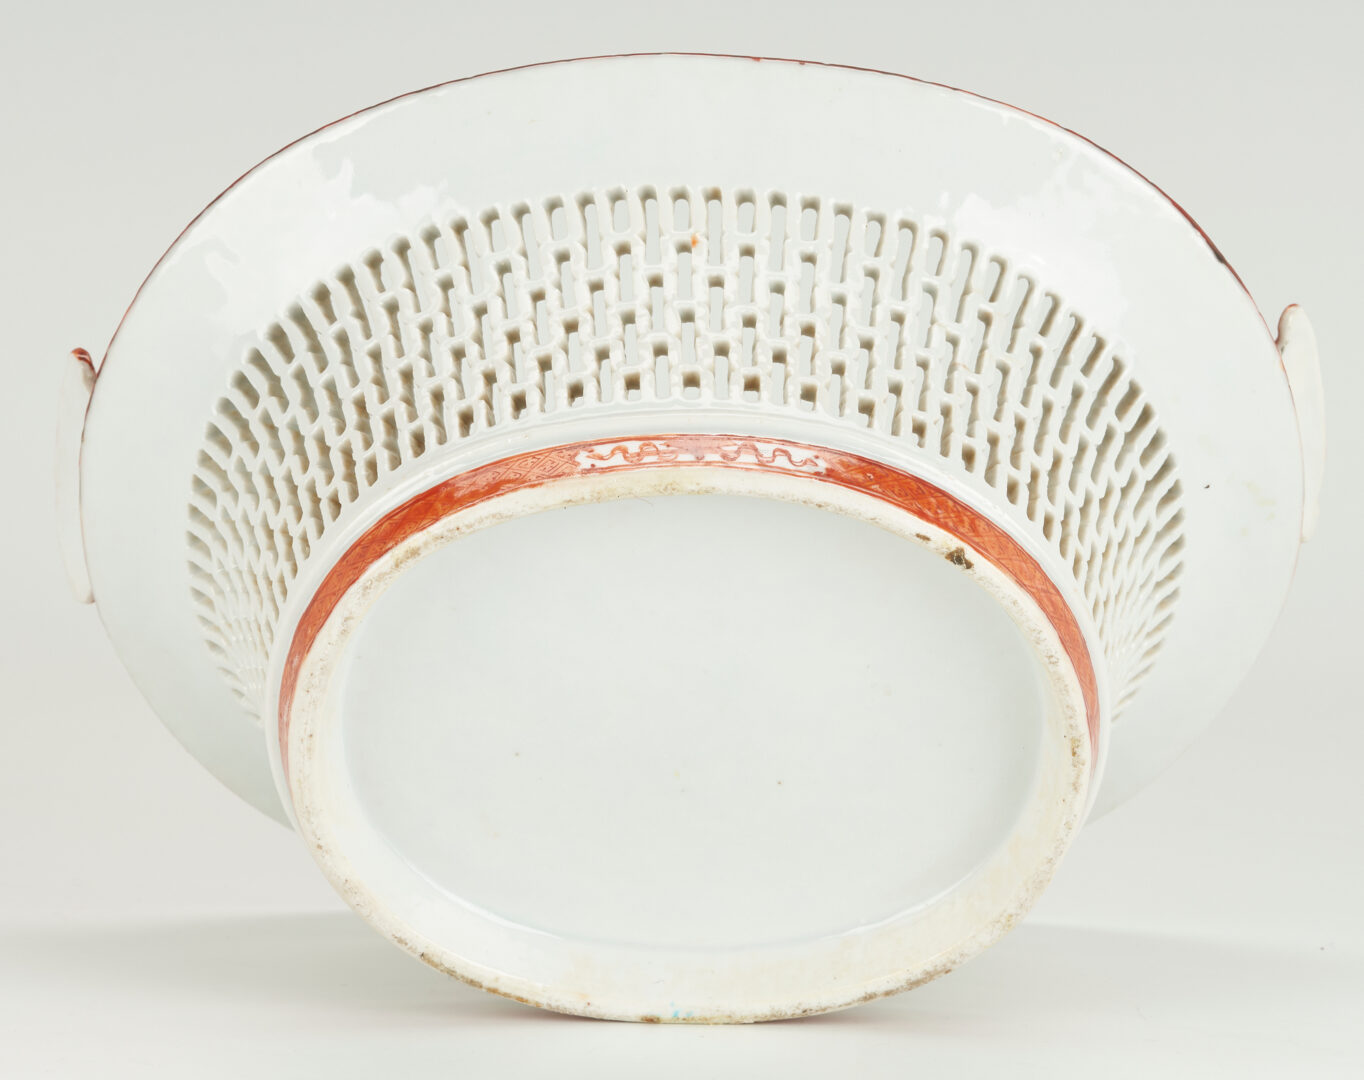 Lot 274: 4 pcs. Asian & English Porcelain, incl. Chinese Export Chestnut Basket